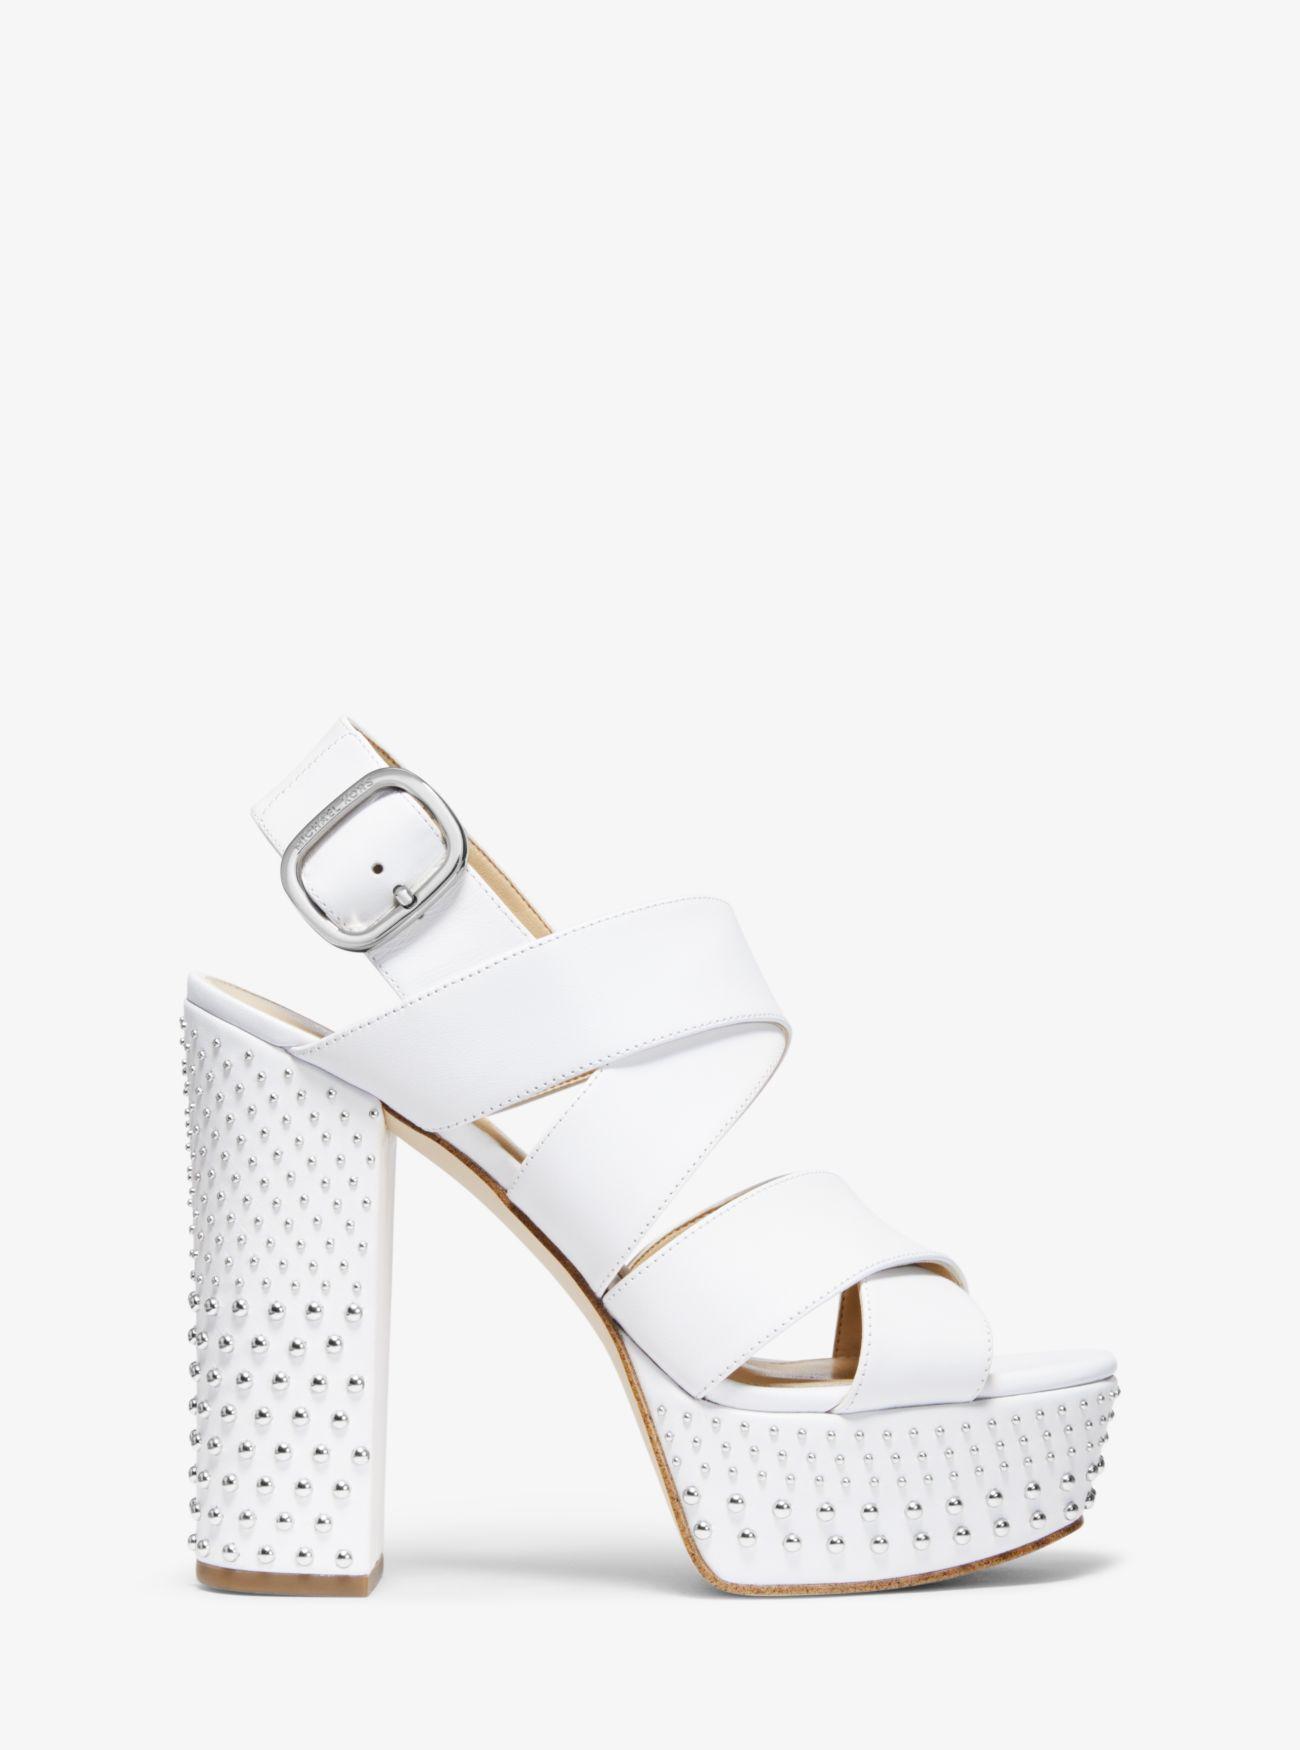 Michael Kors Mila Studded Leather Platform Sandal in White - Save 43% ...